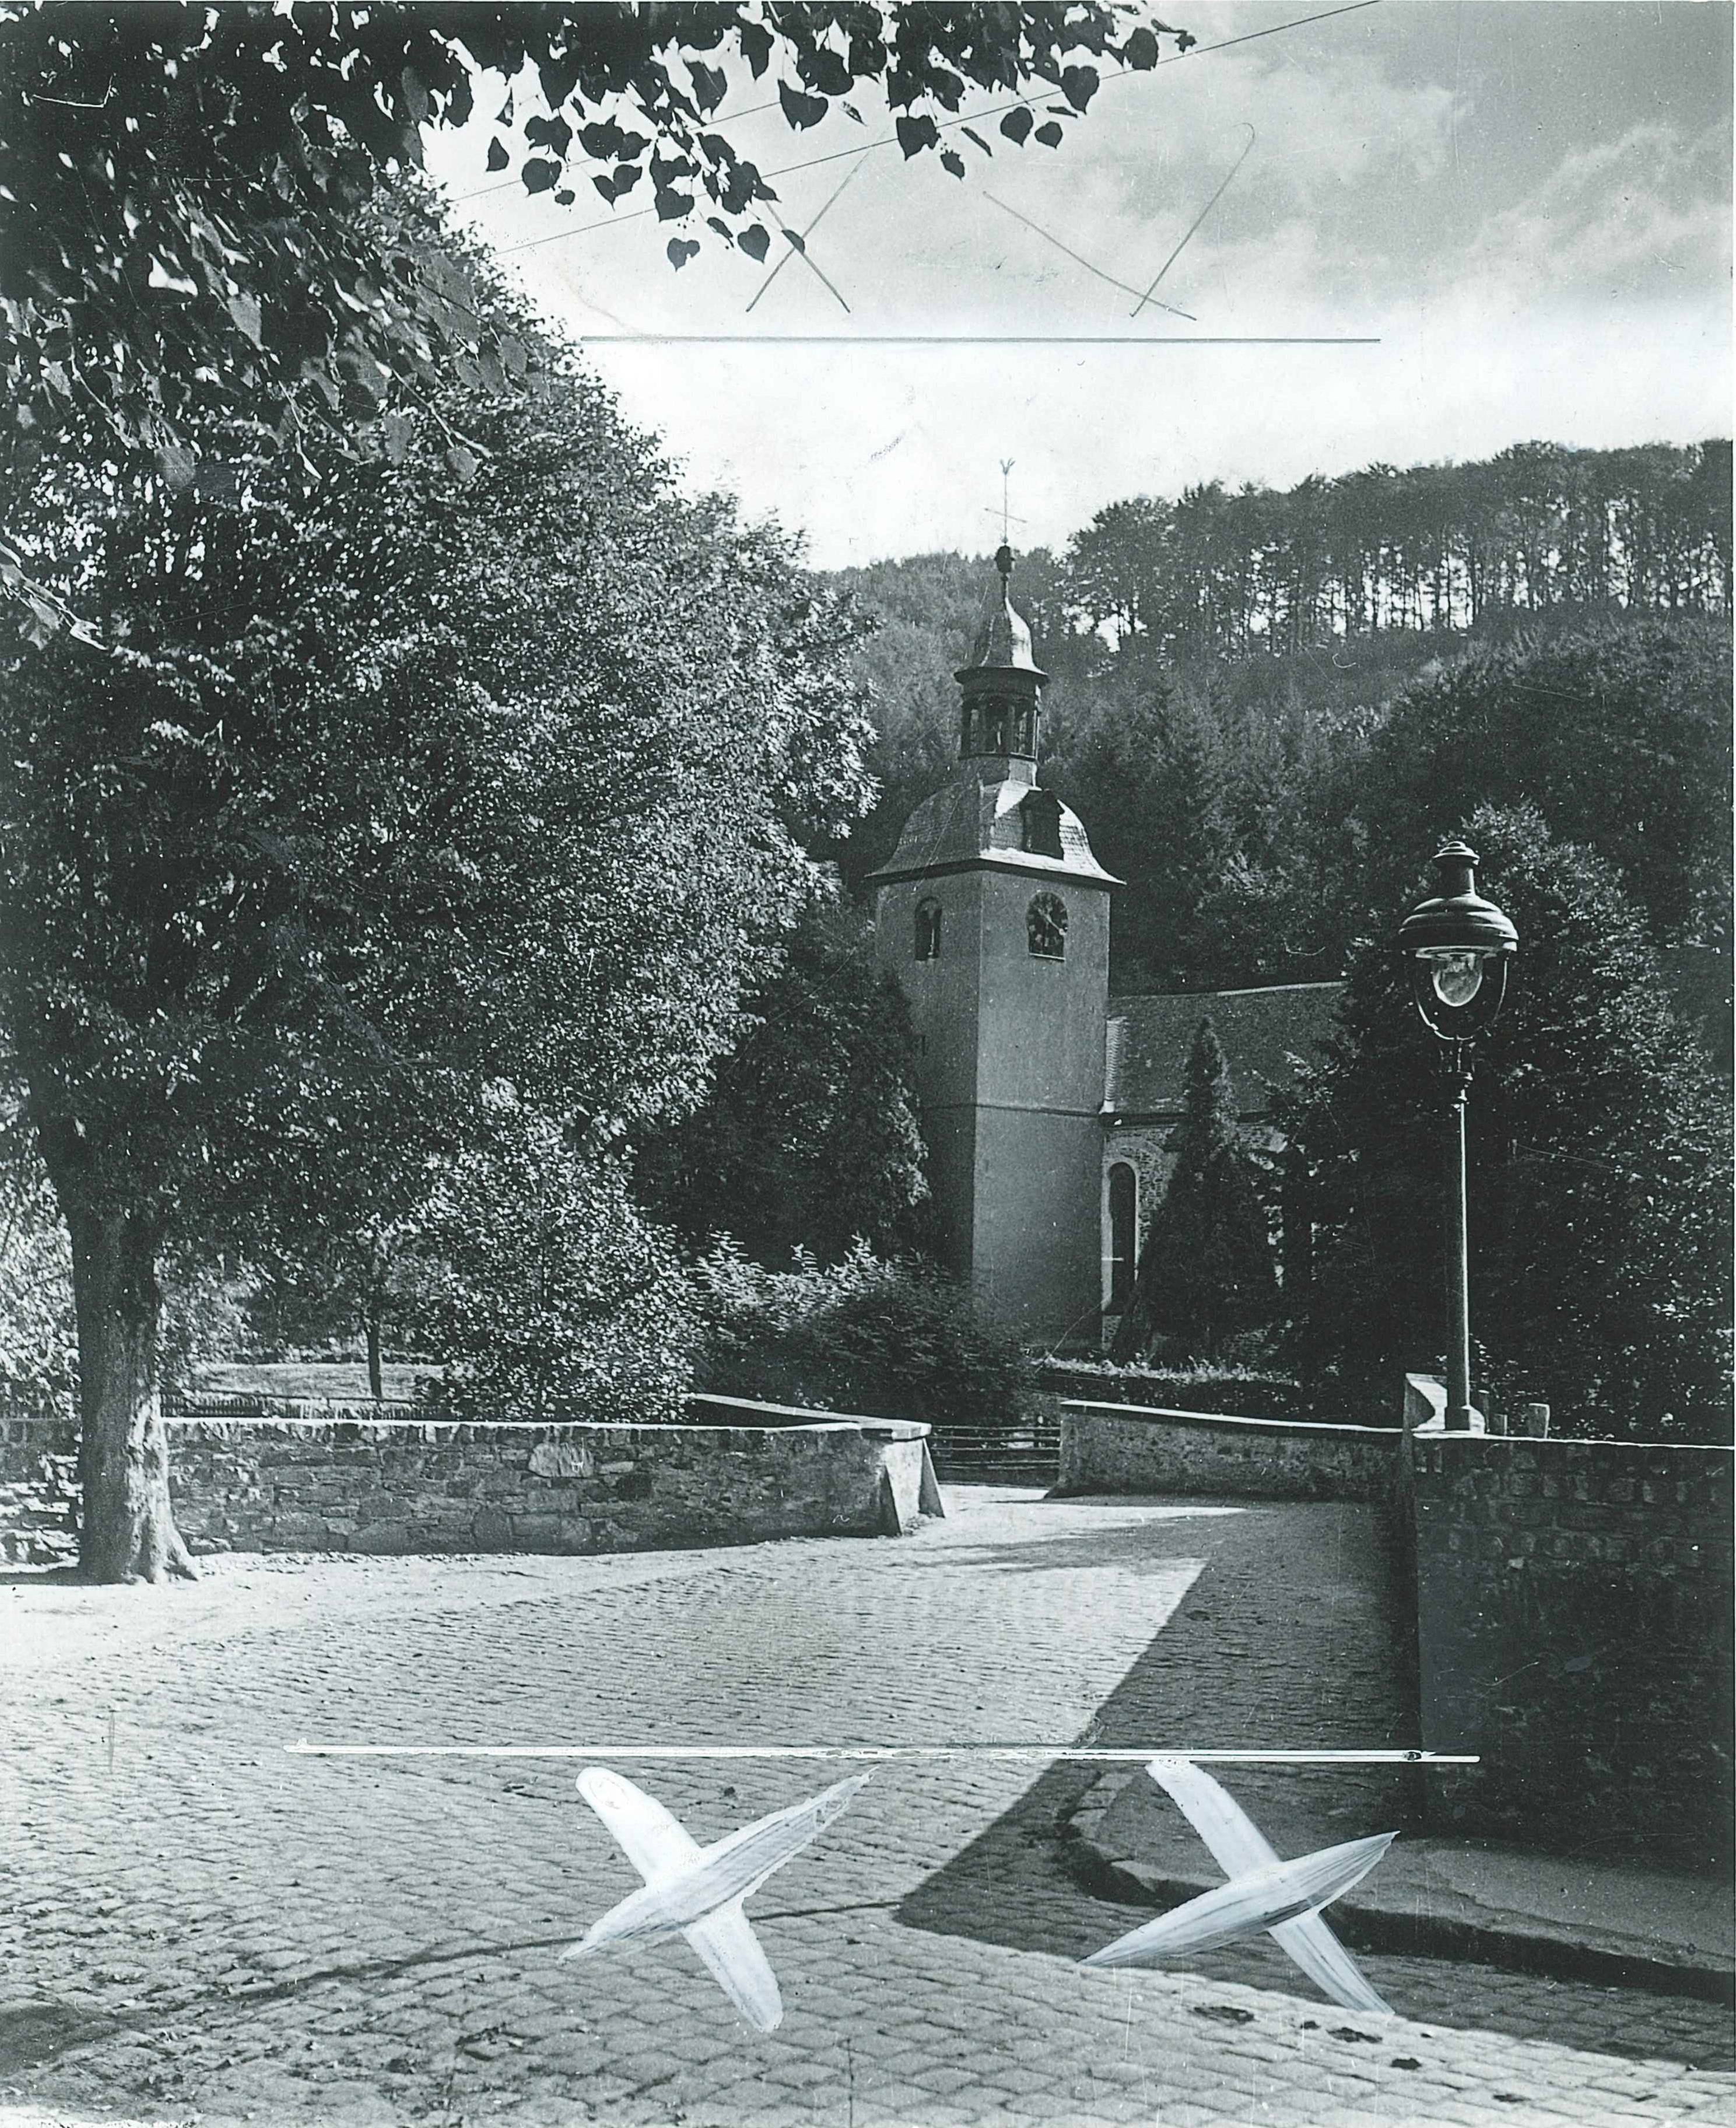 Kirchturm der Abtei in Sayn, 1930er Jahre (REM CC BY-NC-SA)